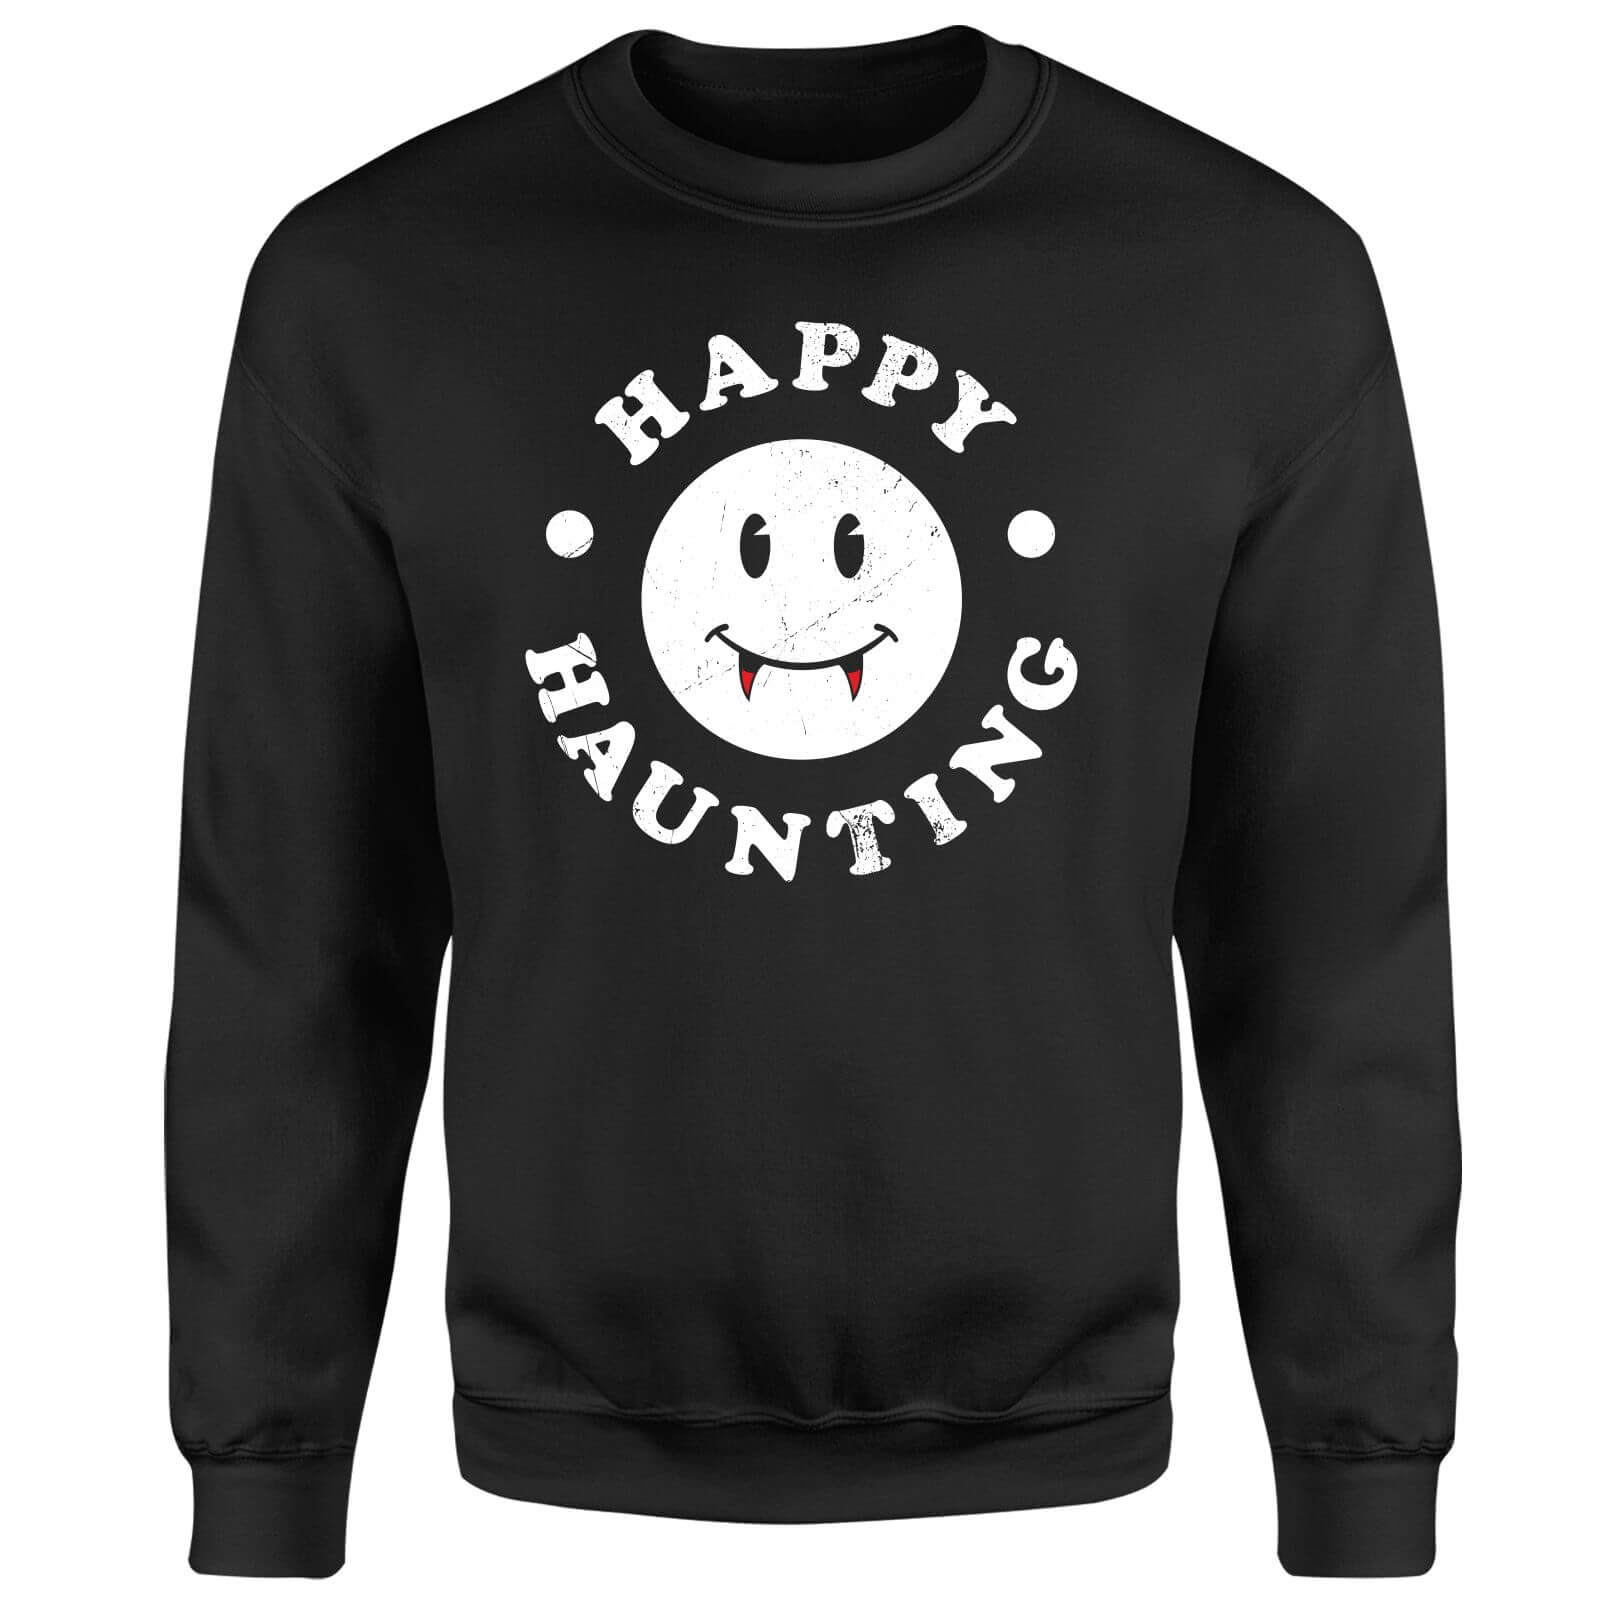 Happy Haunting Sweatshirt - Black - XL - Black